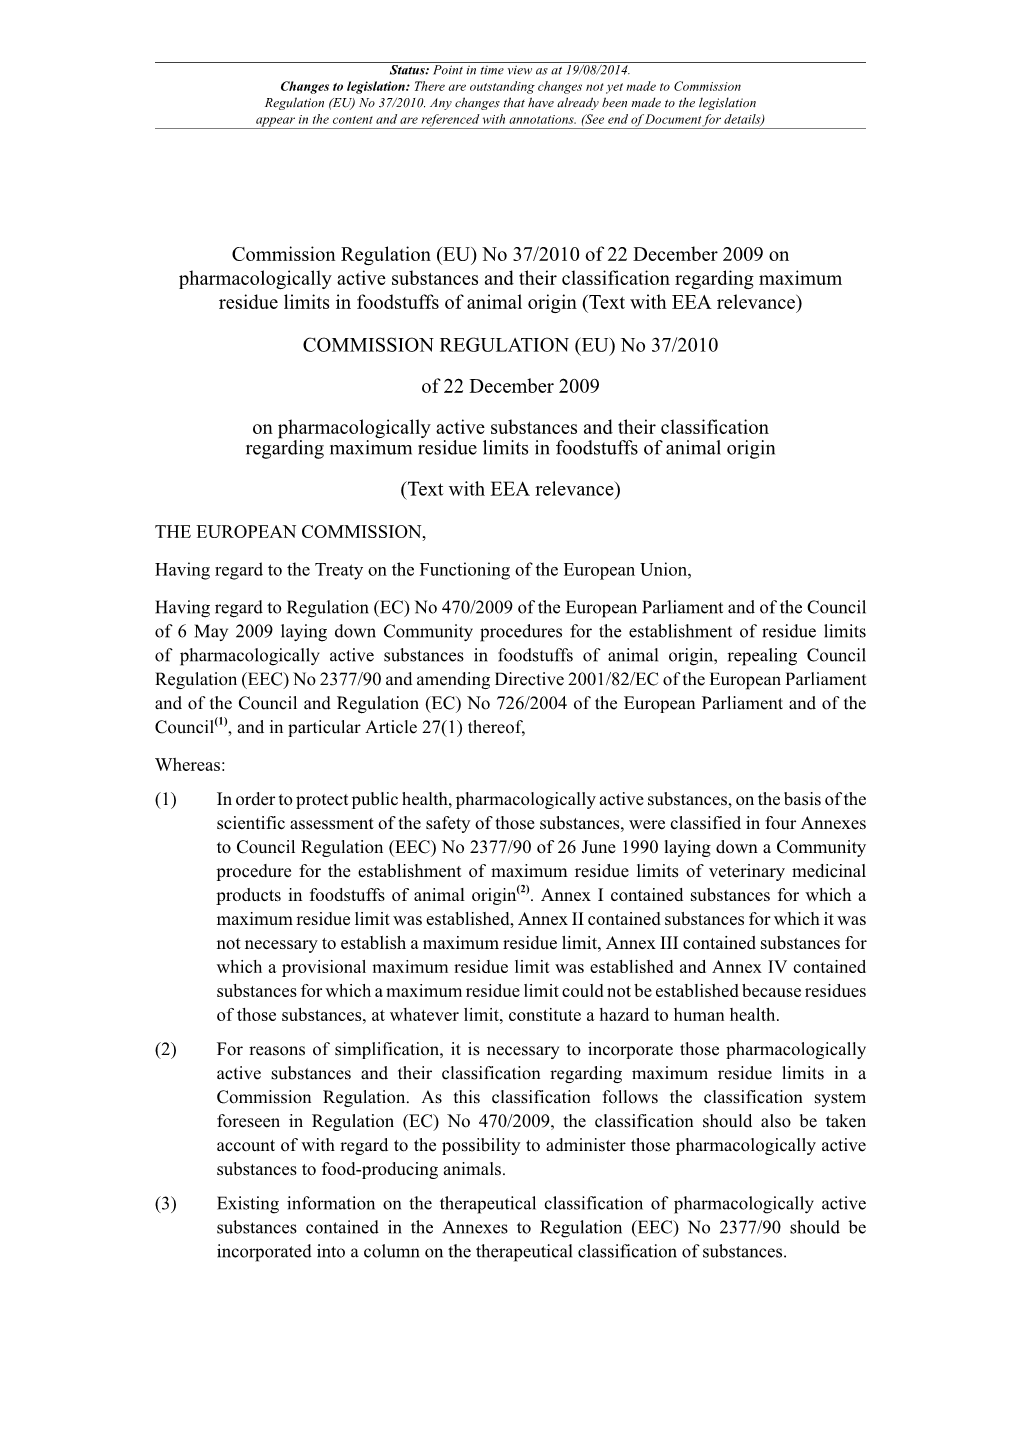 Commission Regulation (EU) No 37/2010